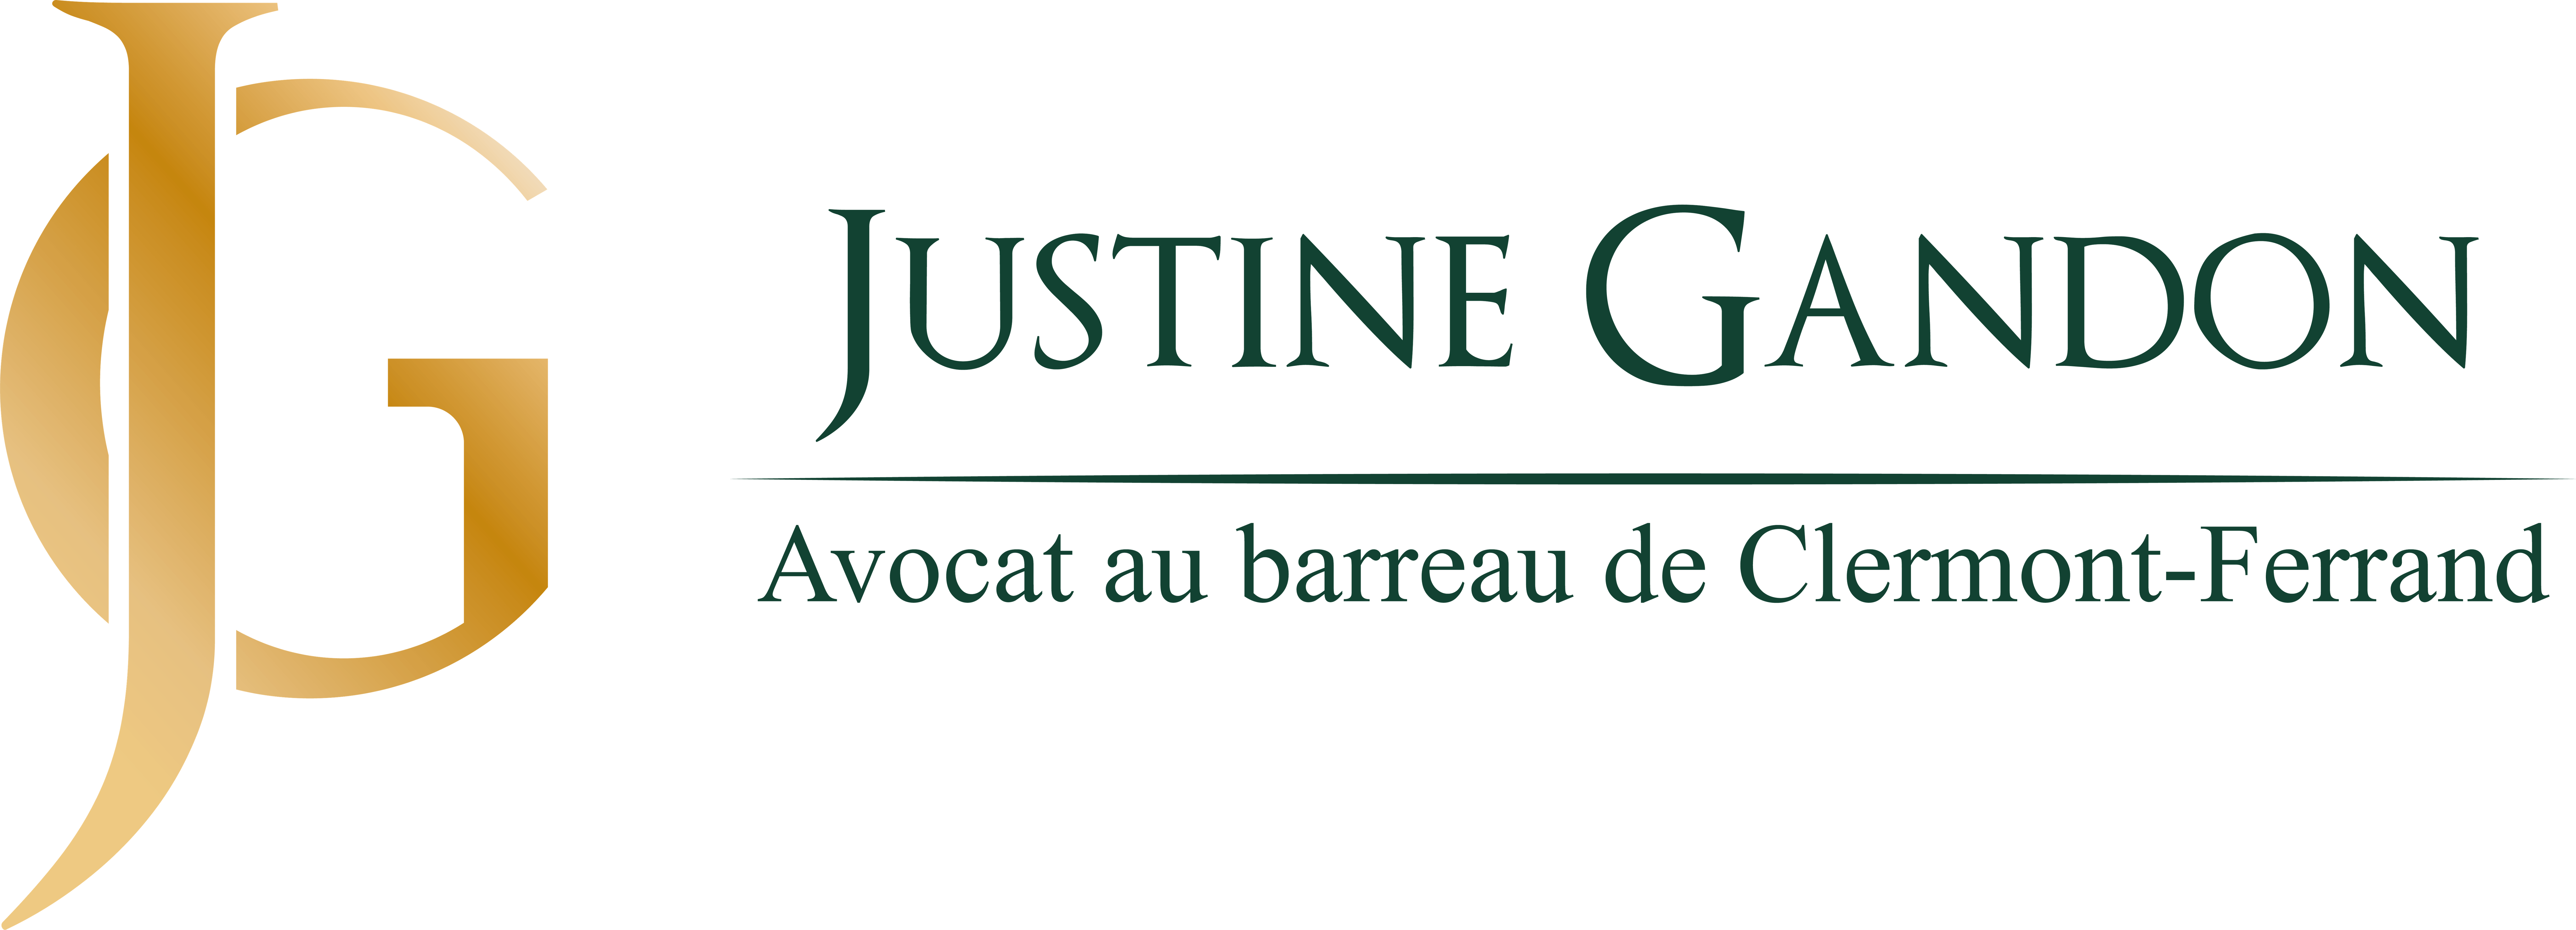 Logo intégrale de Justine Gandon avocate